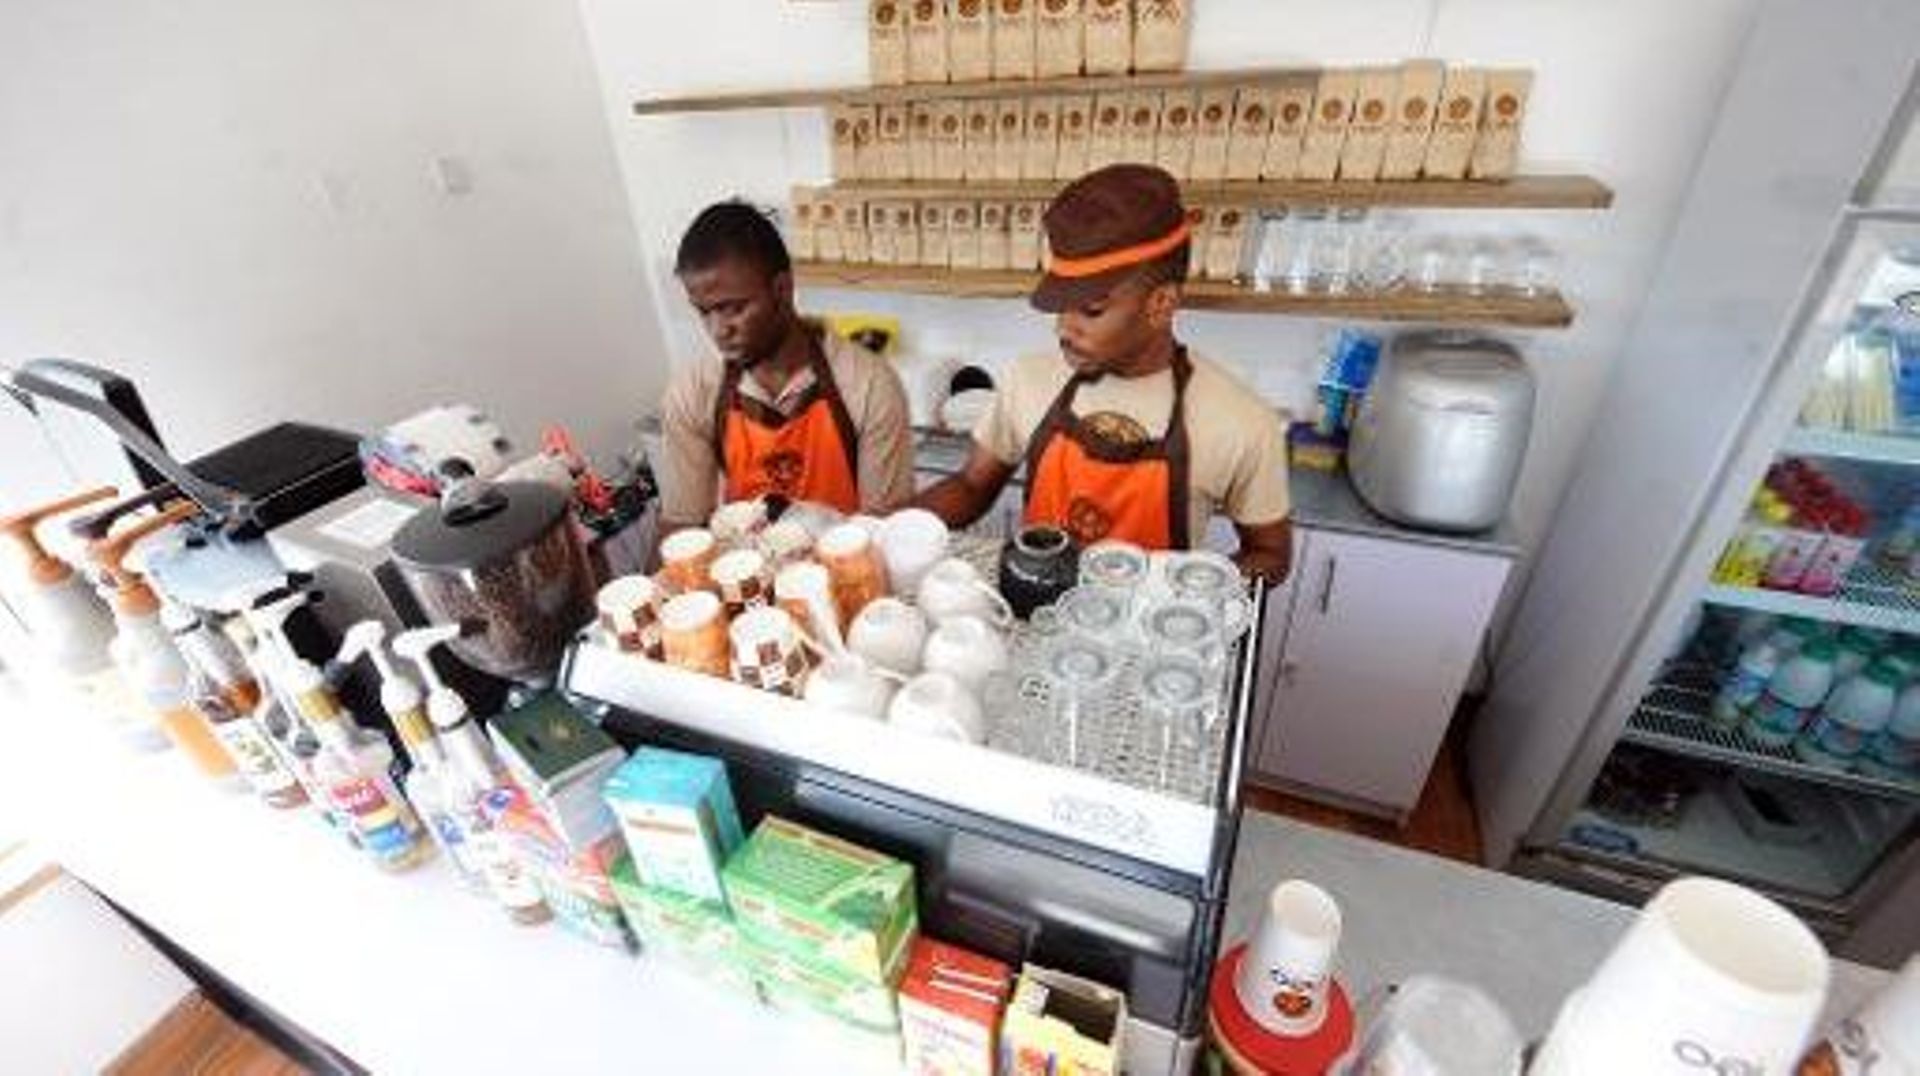 Nigeria: la chaîne de café Neo se rêve déjà en Starbucks